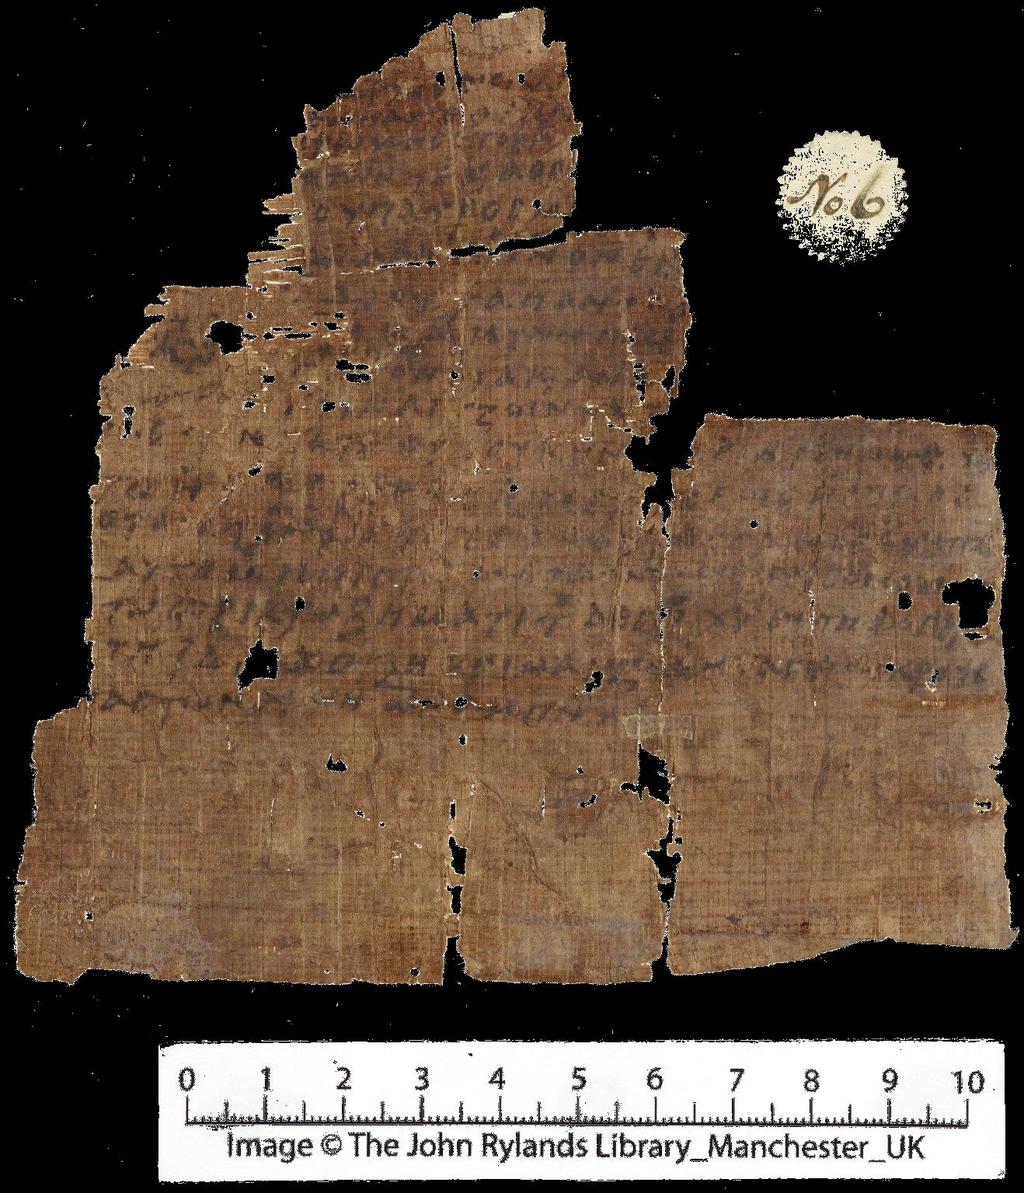 Oldest extant manuscript